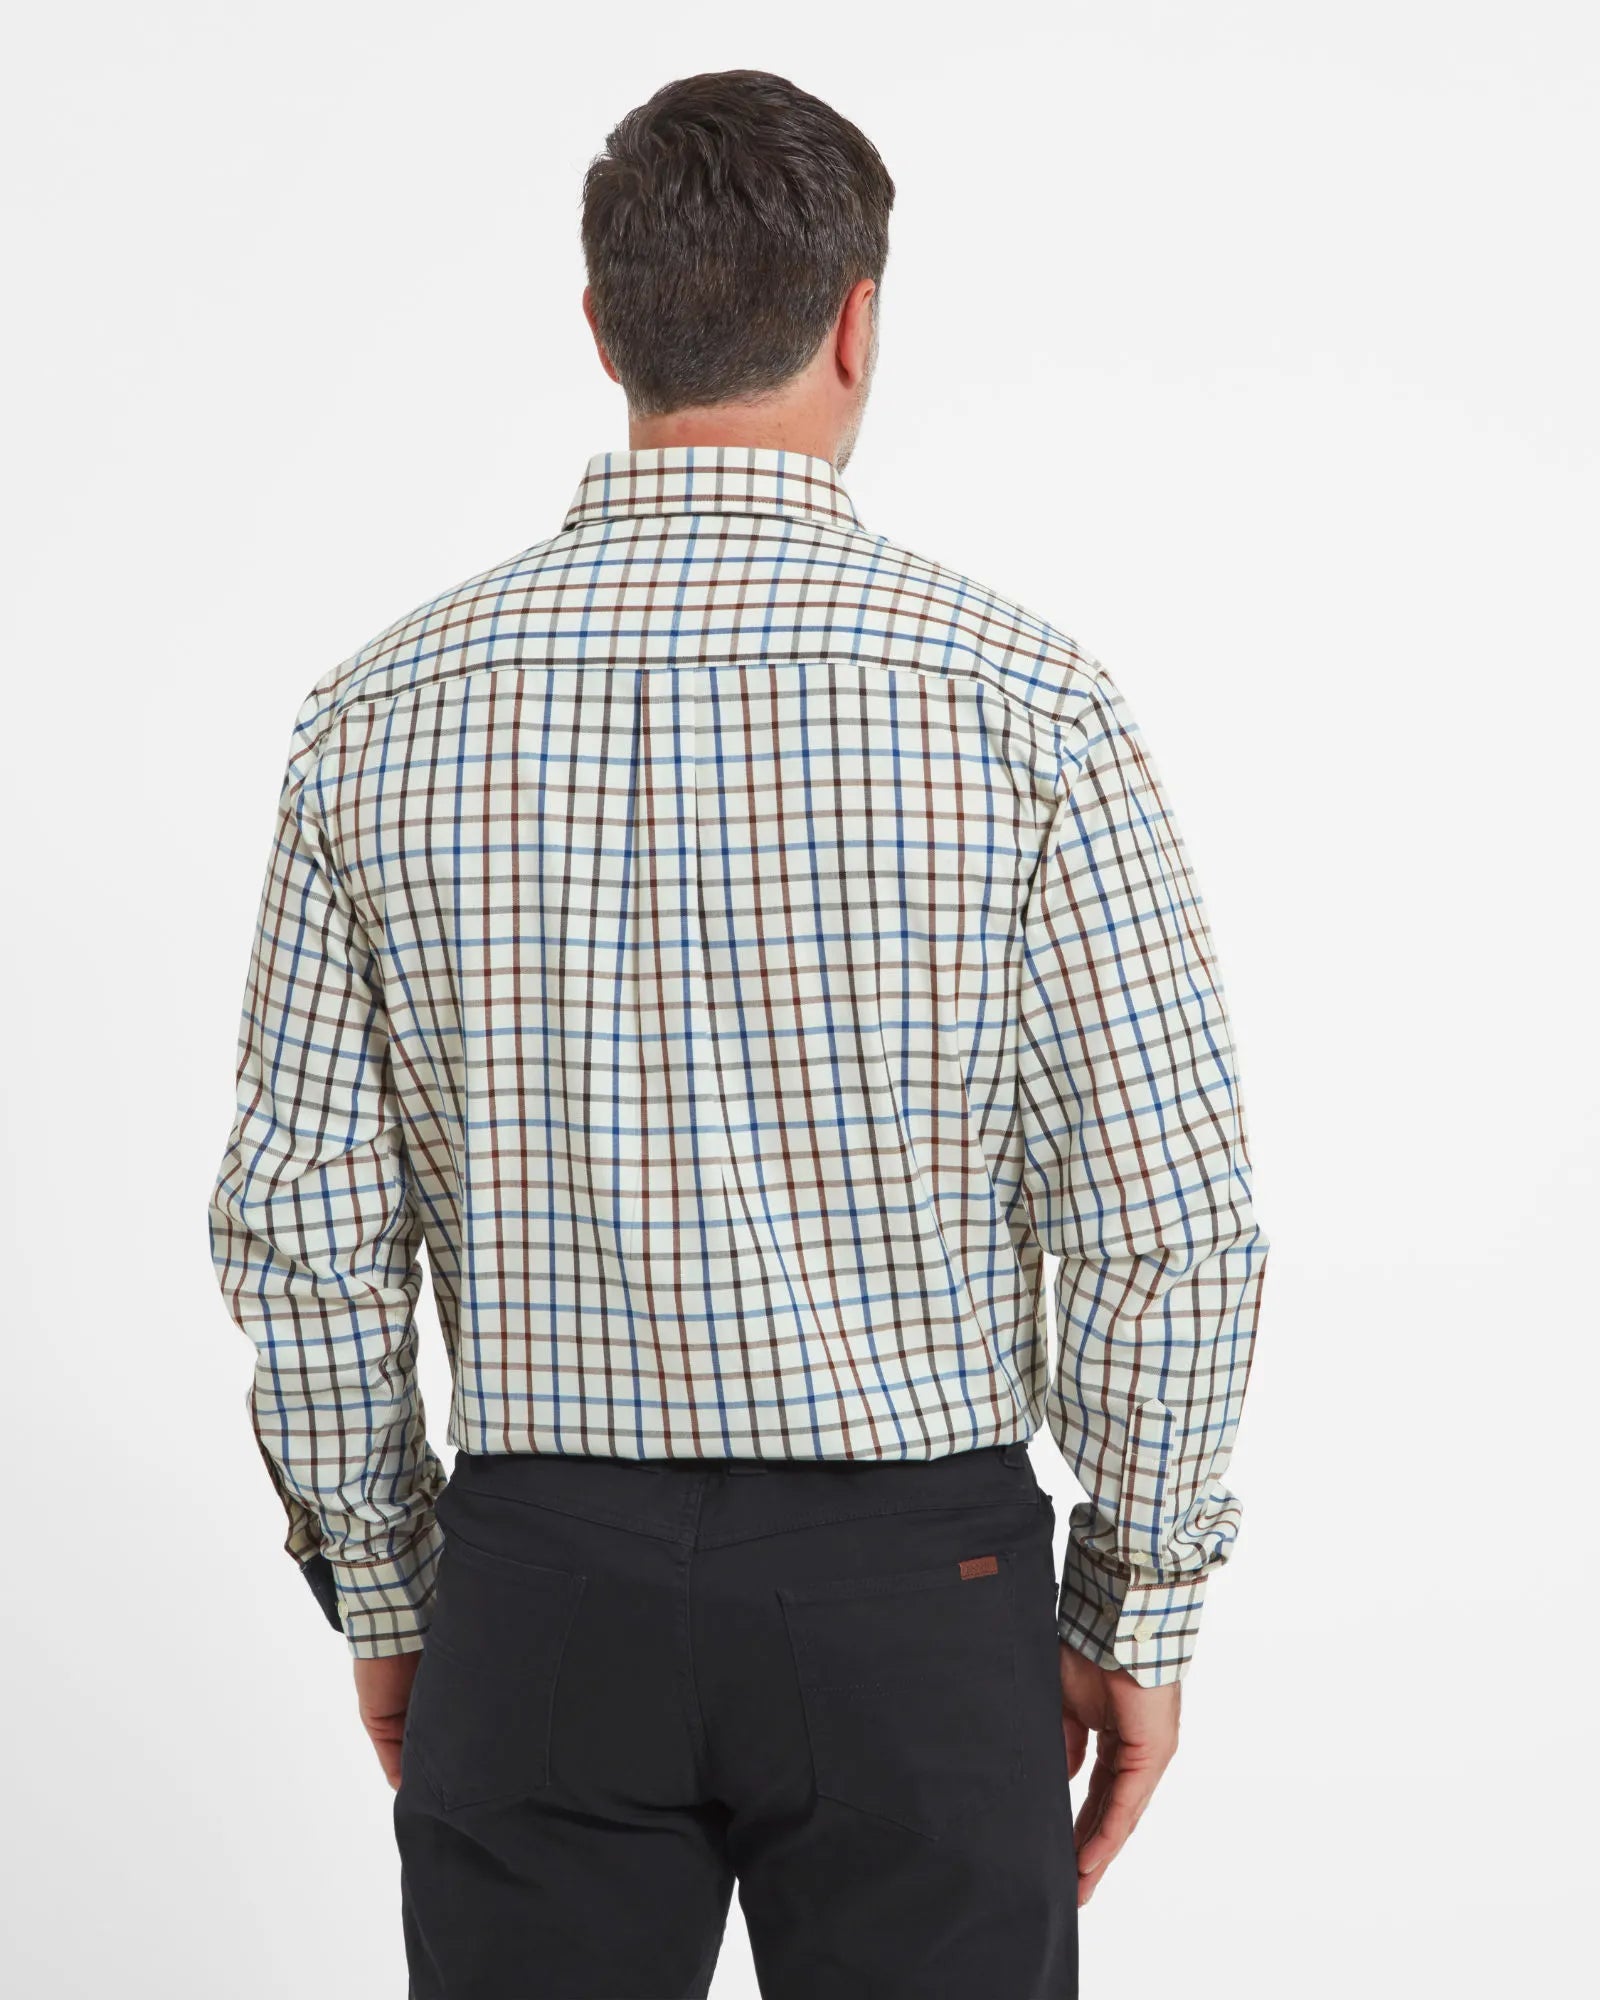 Brancaster Classic Shirt - Brown/Navy Check